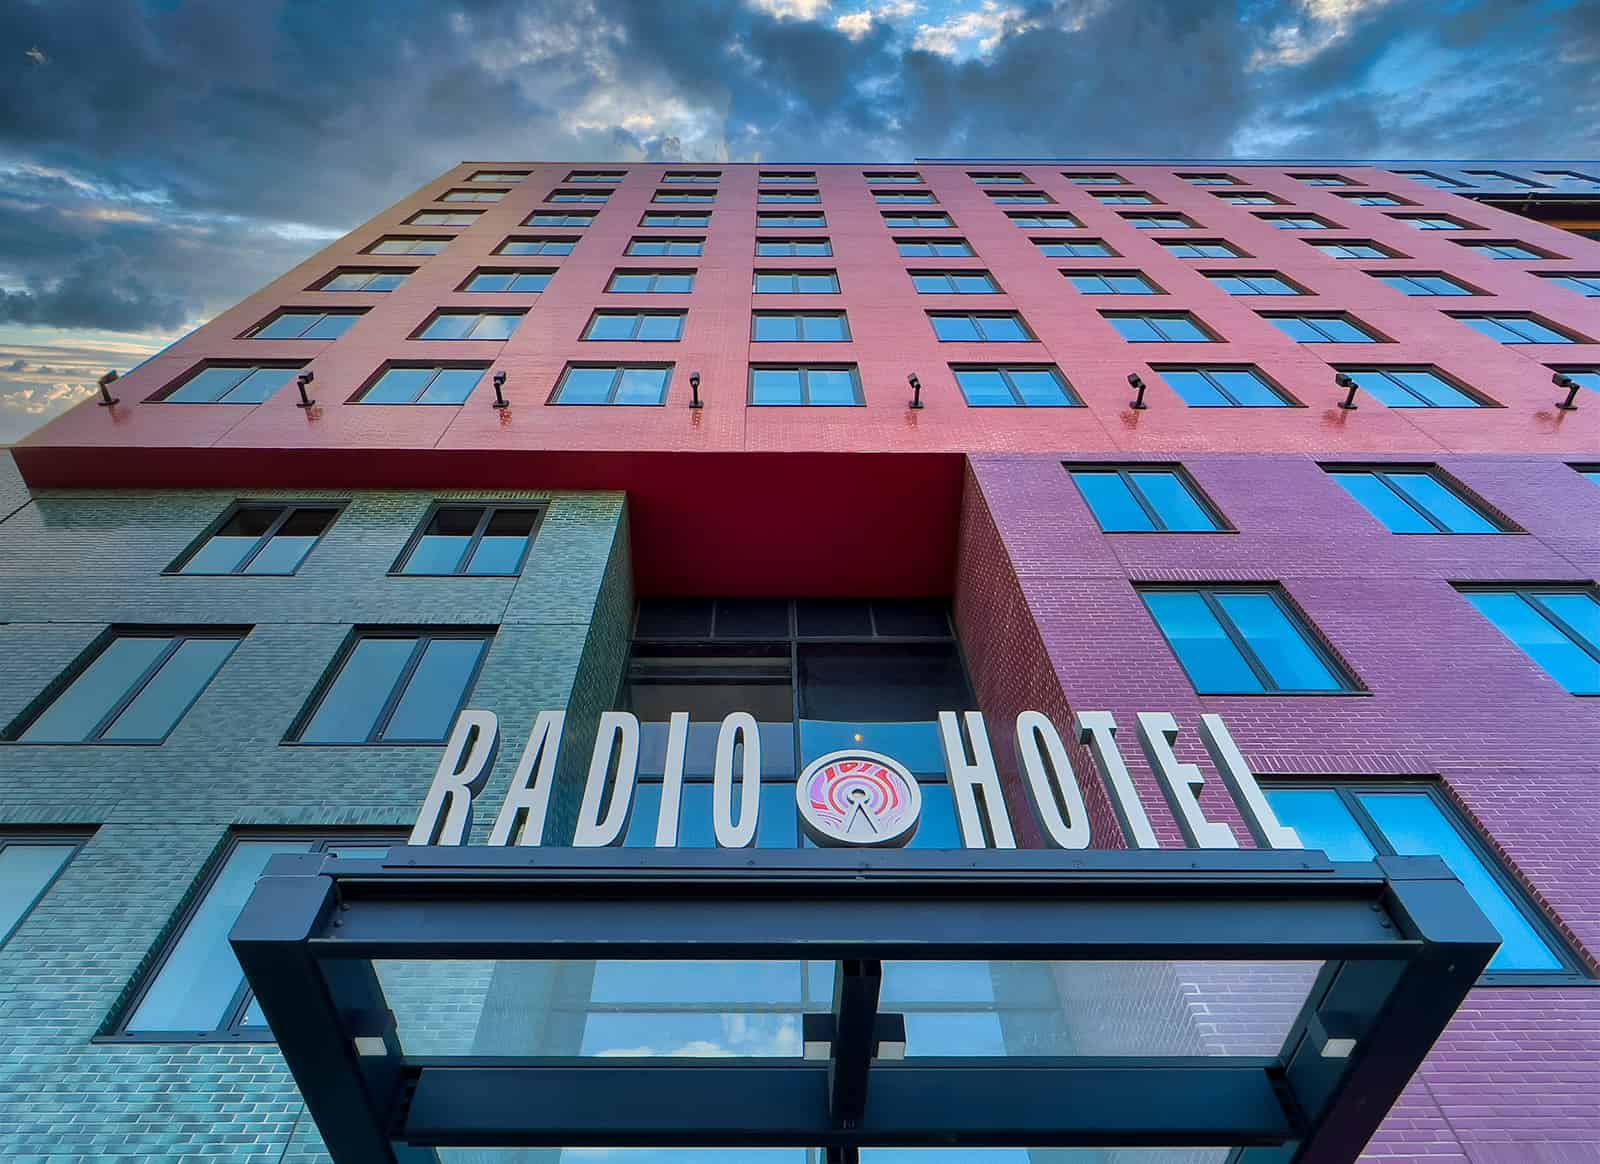 Radio Hotel & Tower